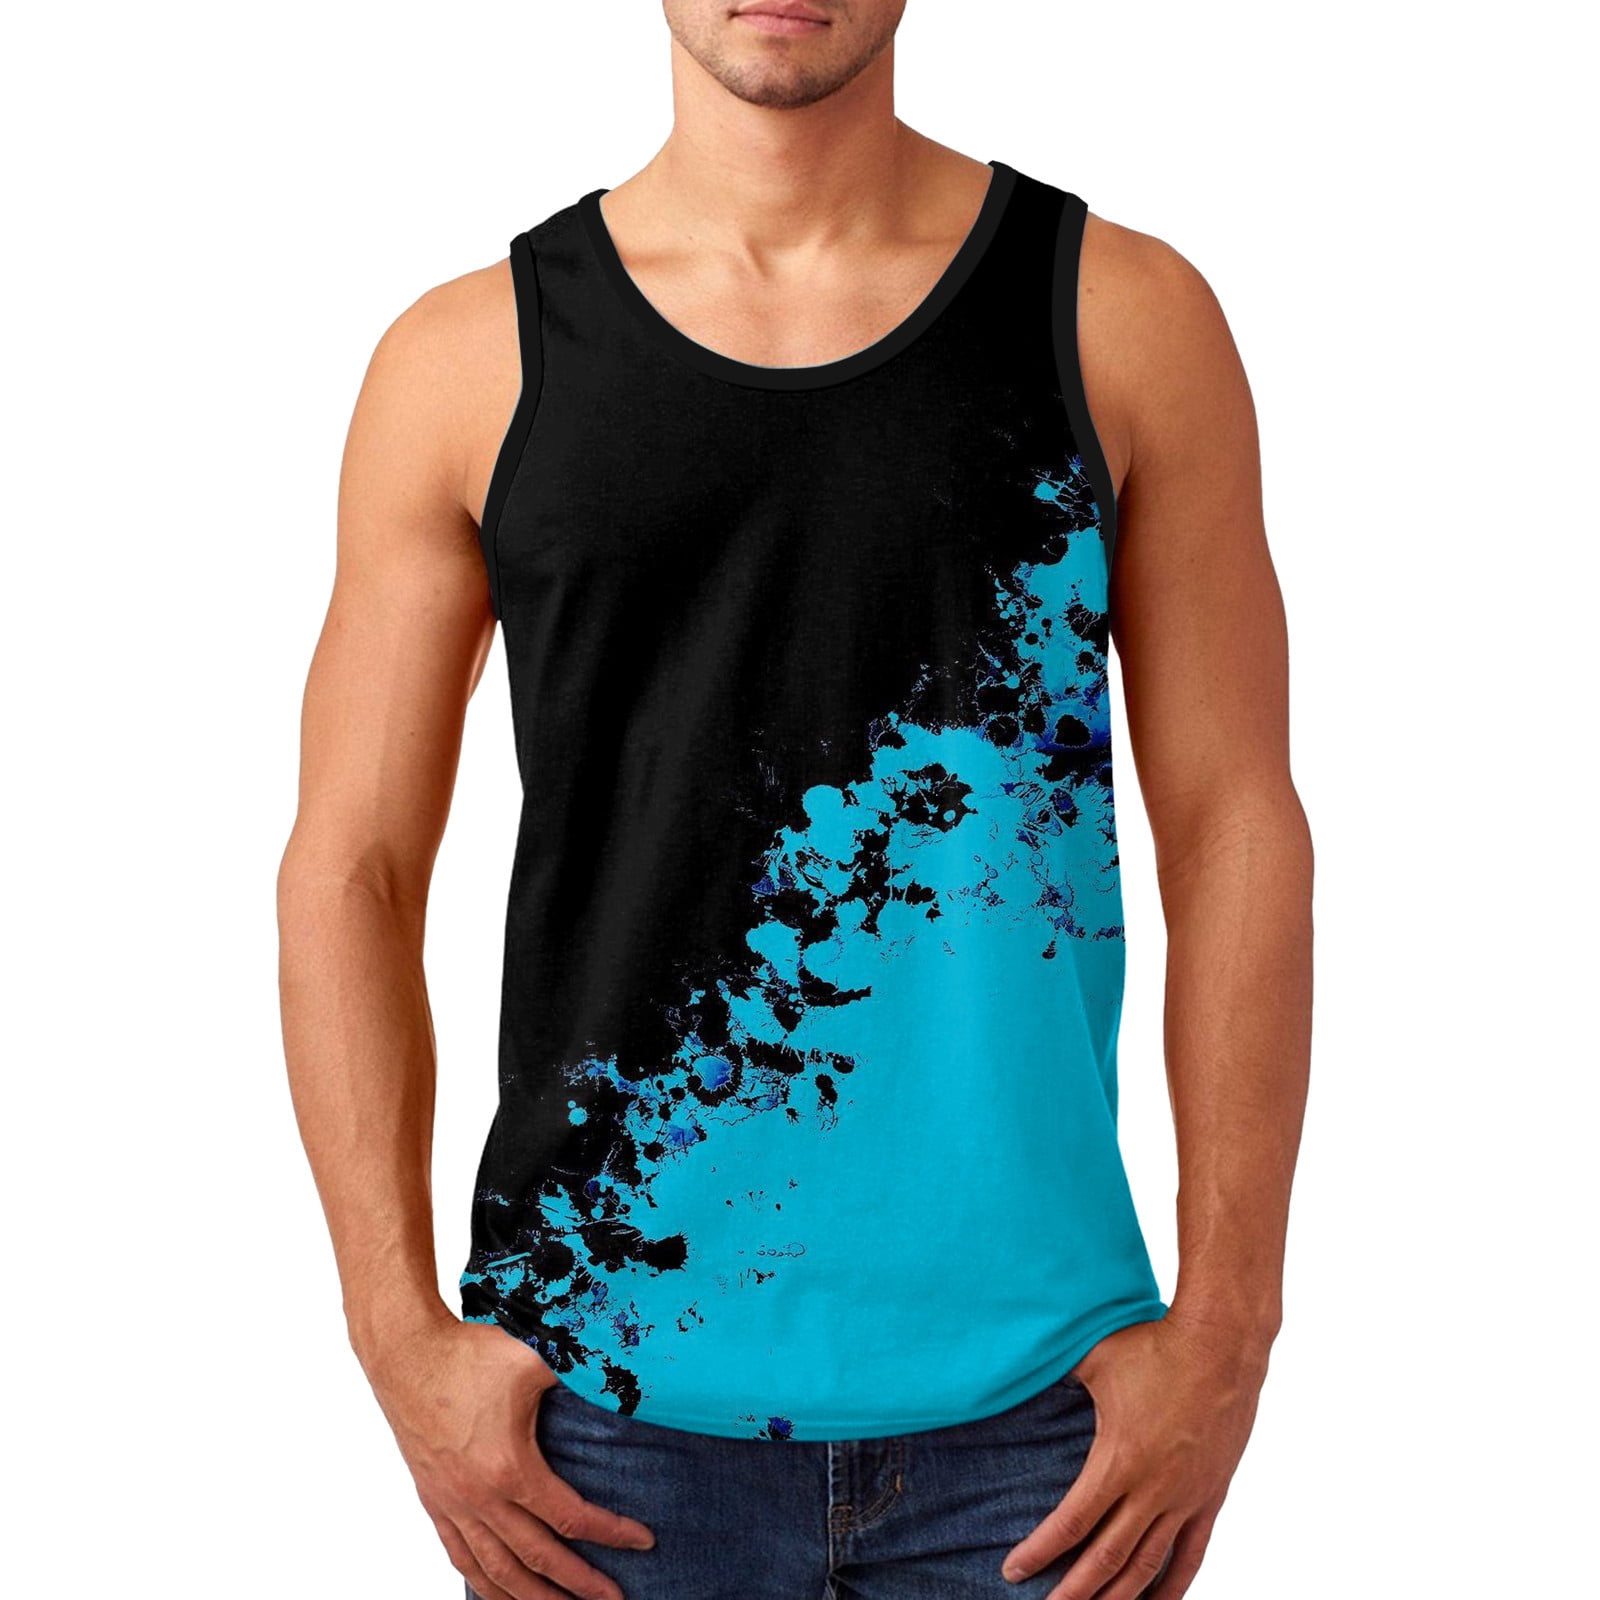 Outfmvch tank top for men Summer Printed Fashion Casual Sports Beach ...